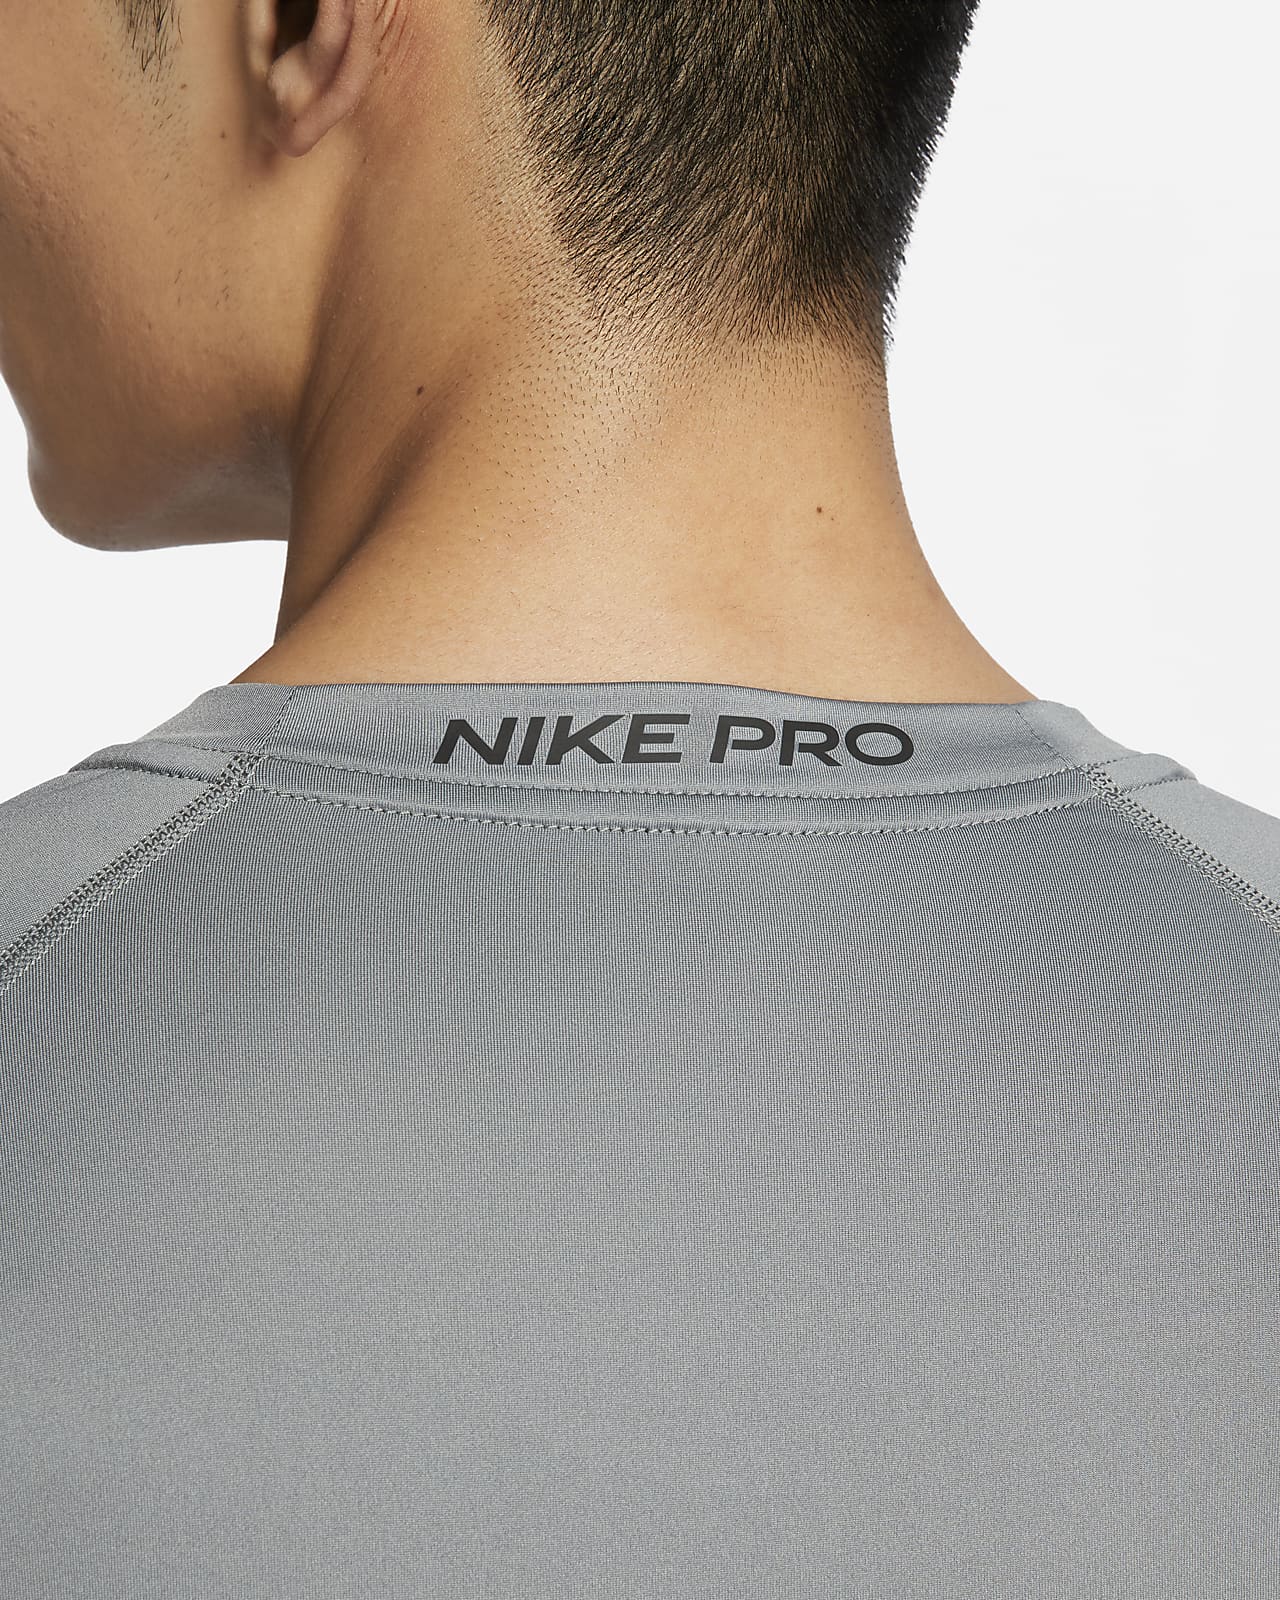 NWT Nike Womens Dri-Fit Studio Short Sleeve Yoga Top Size XS S M AR6367 